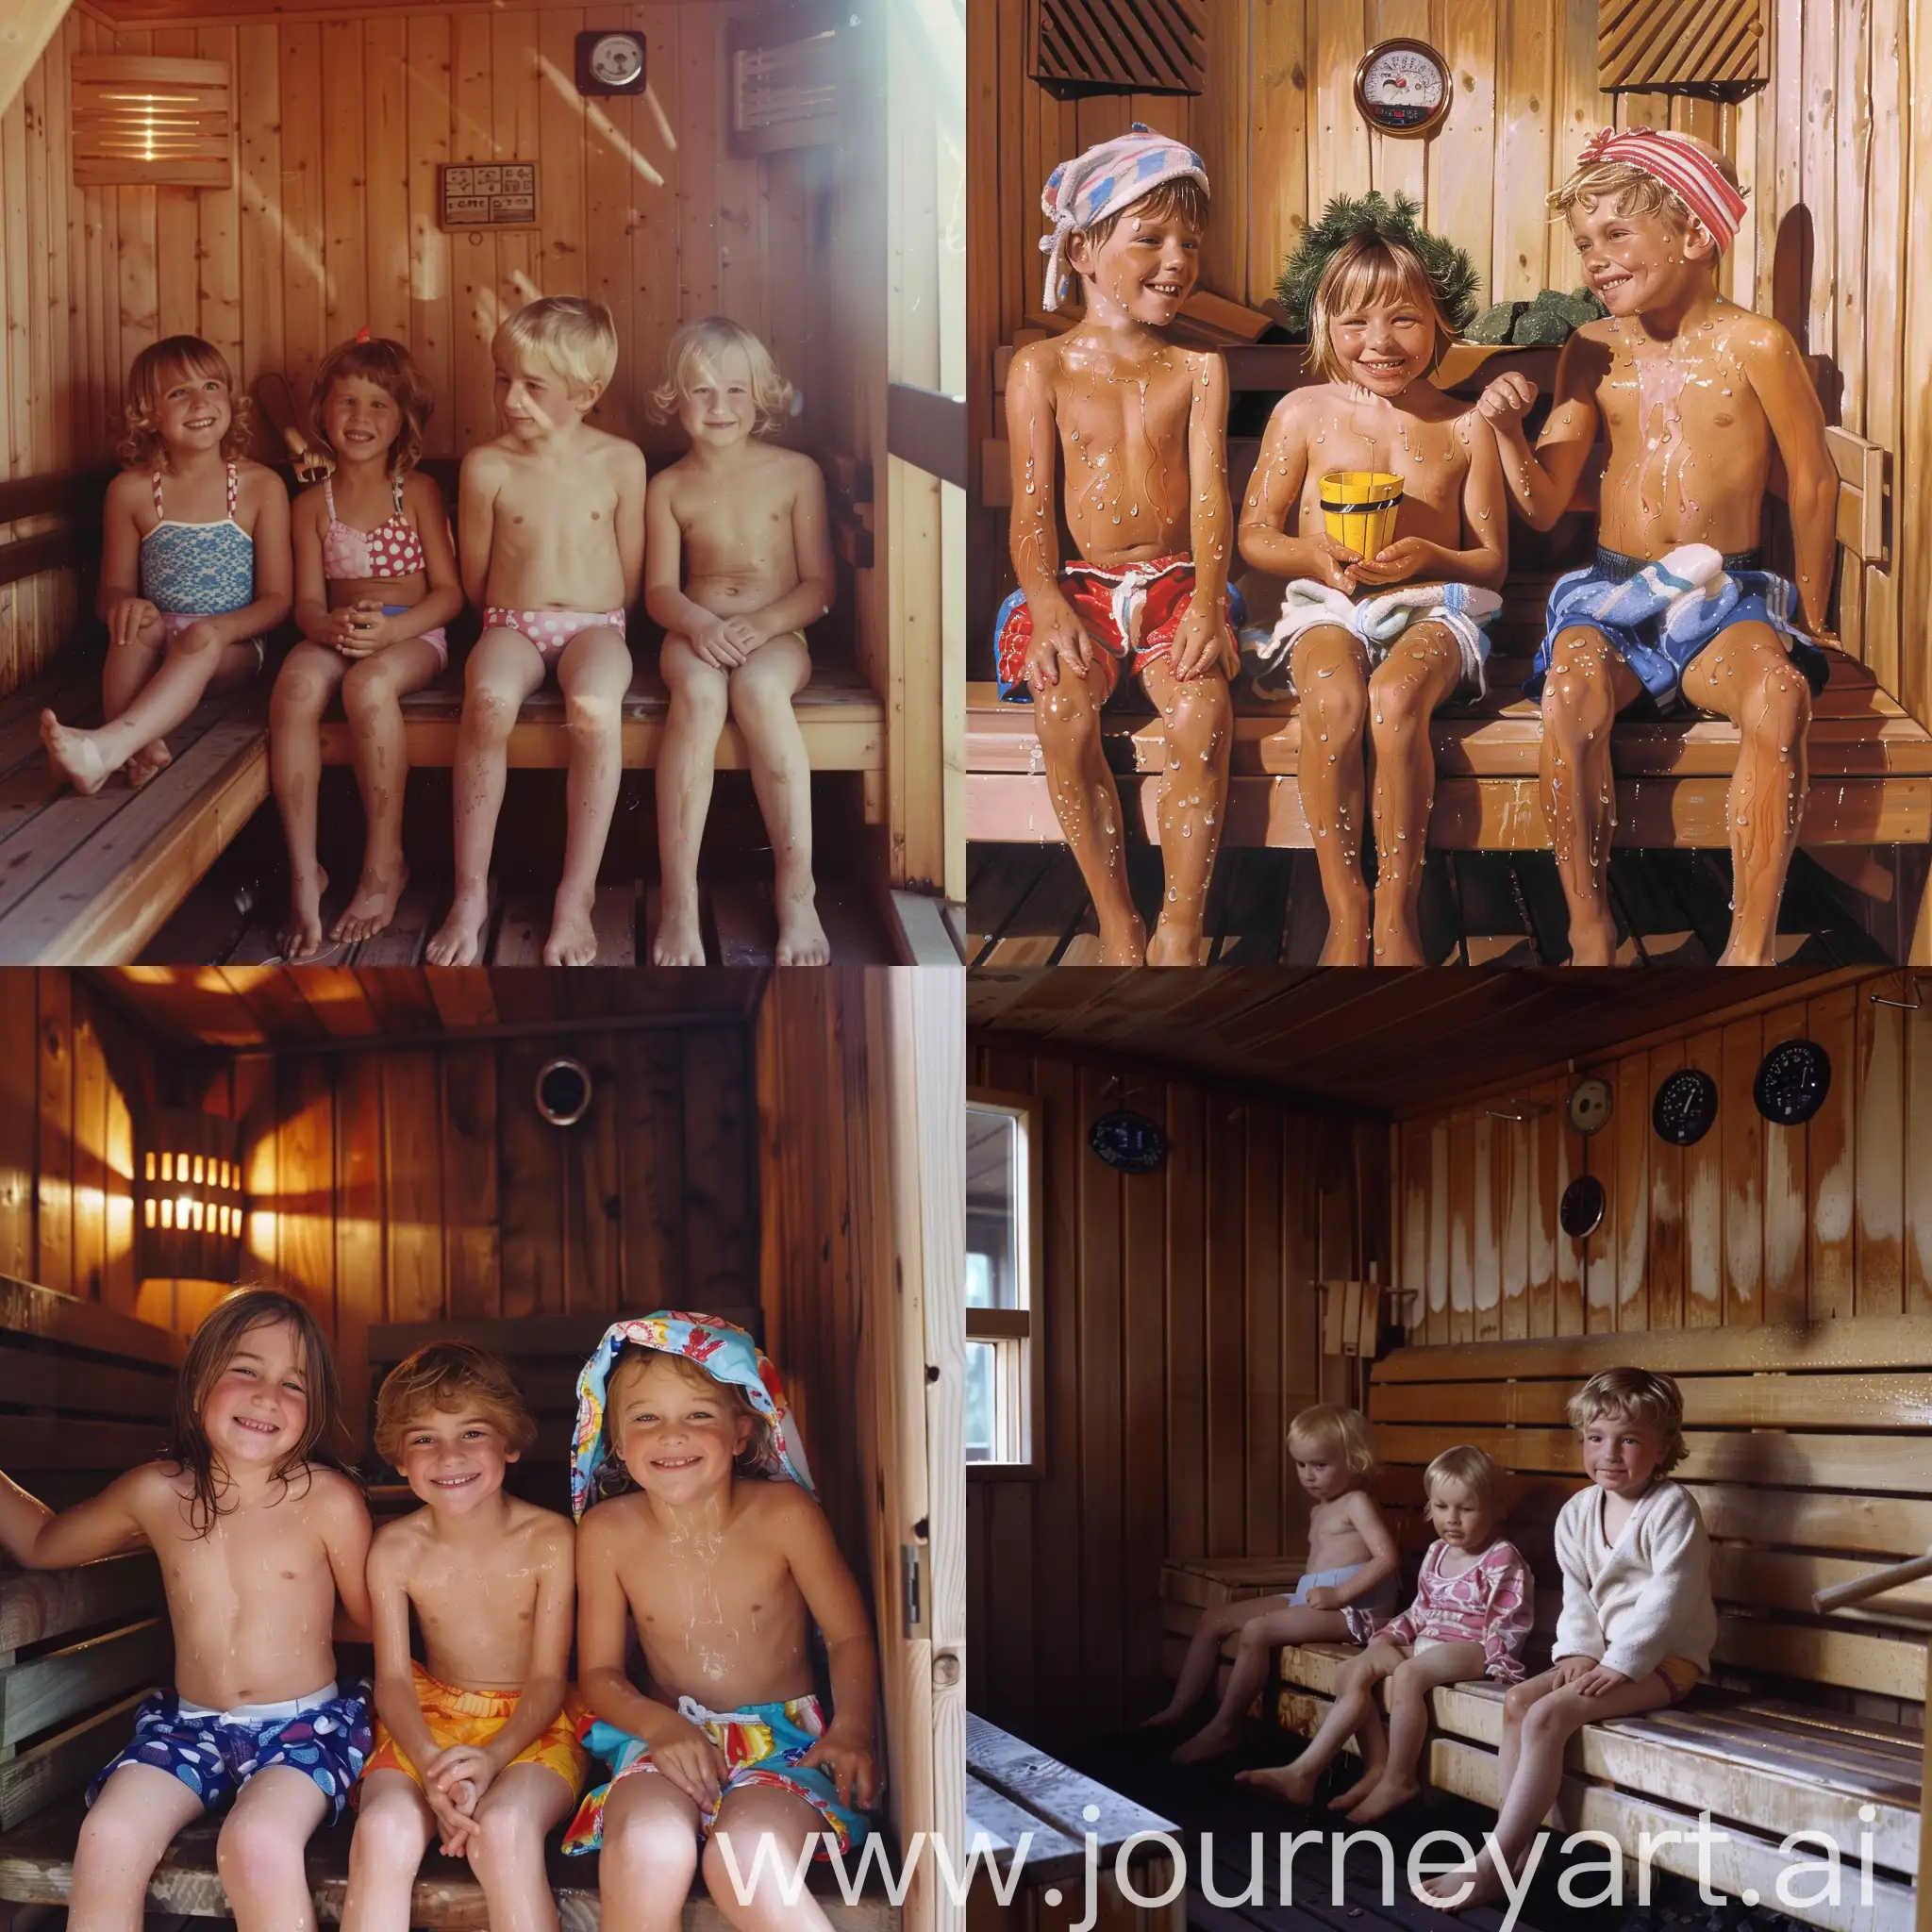 Playful-Kids-Enjoying-Sauna-Time-Together